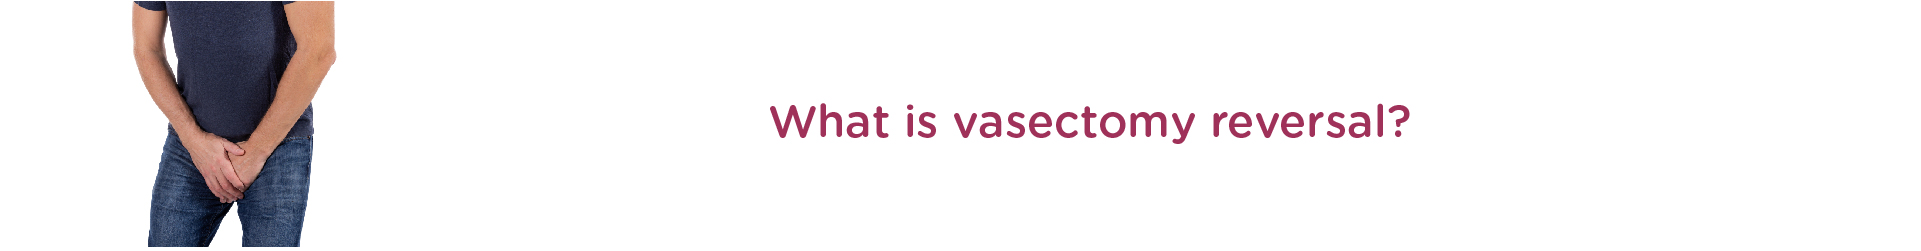 What is Vasectomy Reversal?